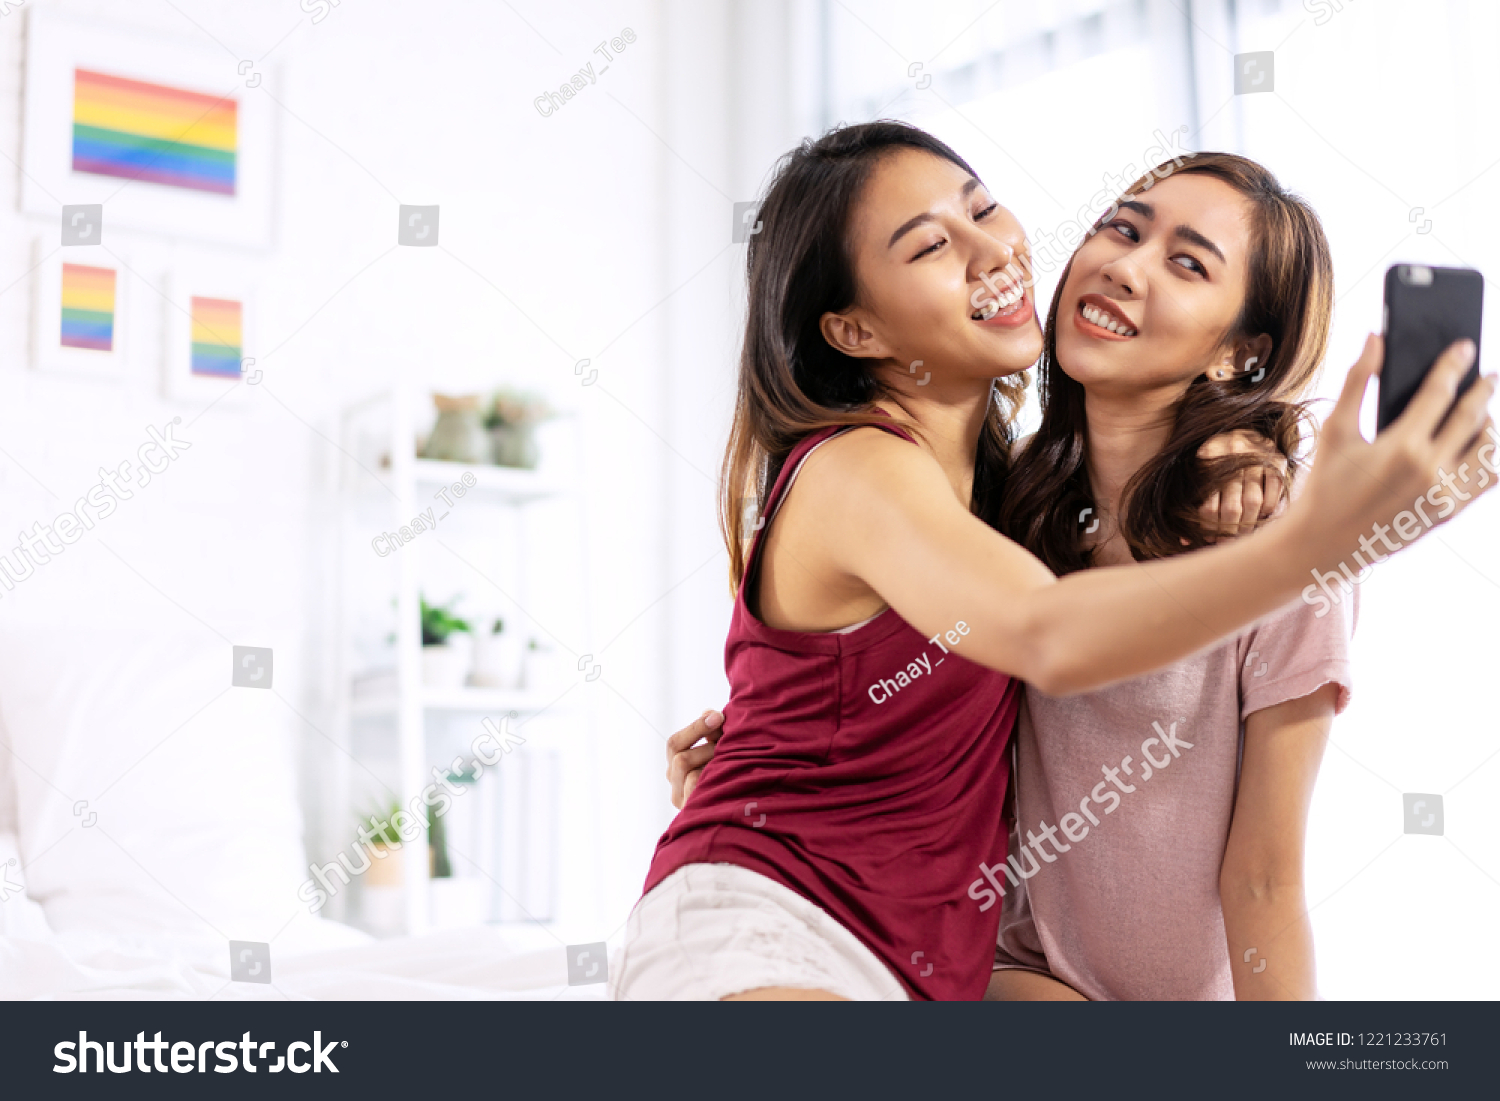 Young Thai Lesbians